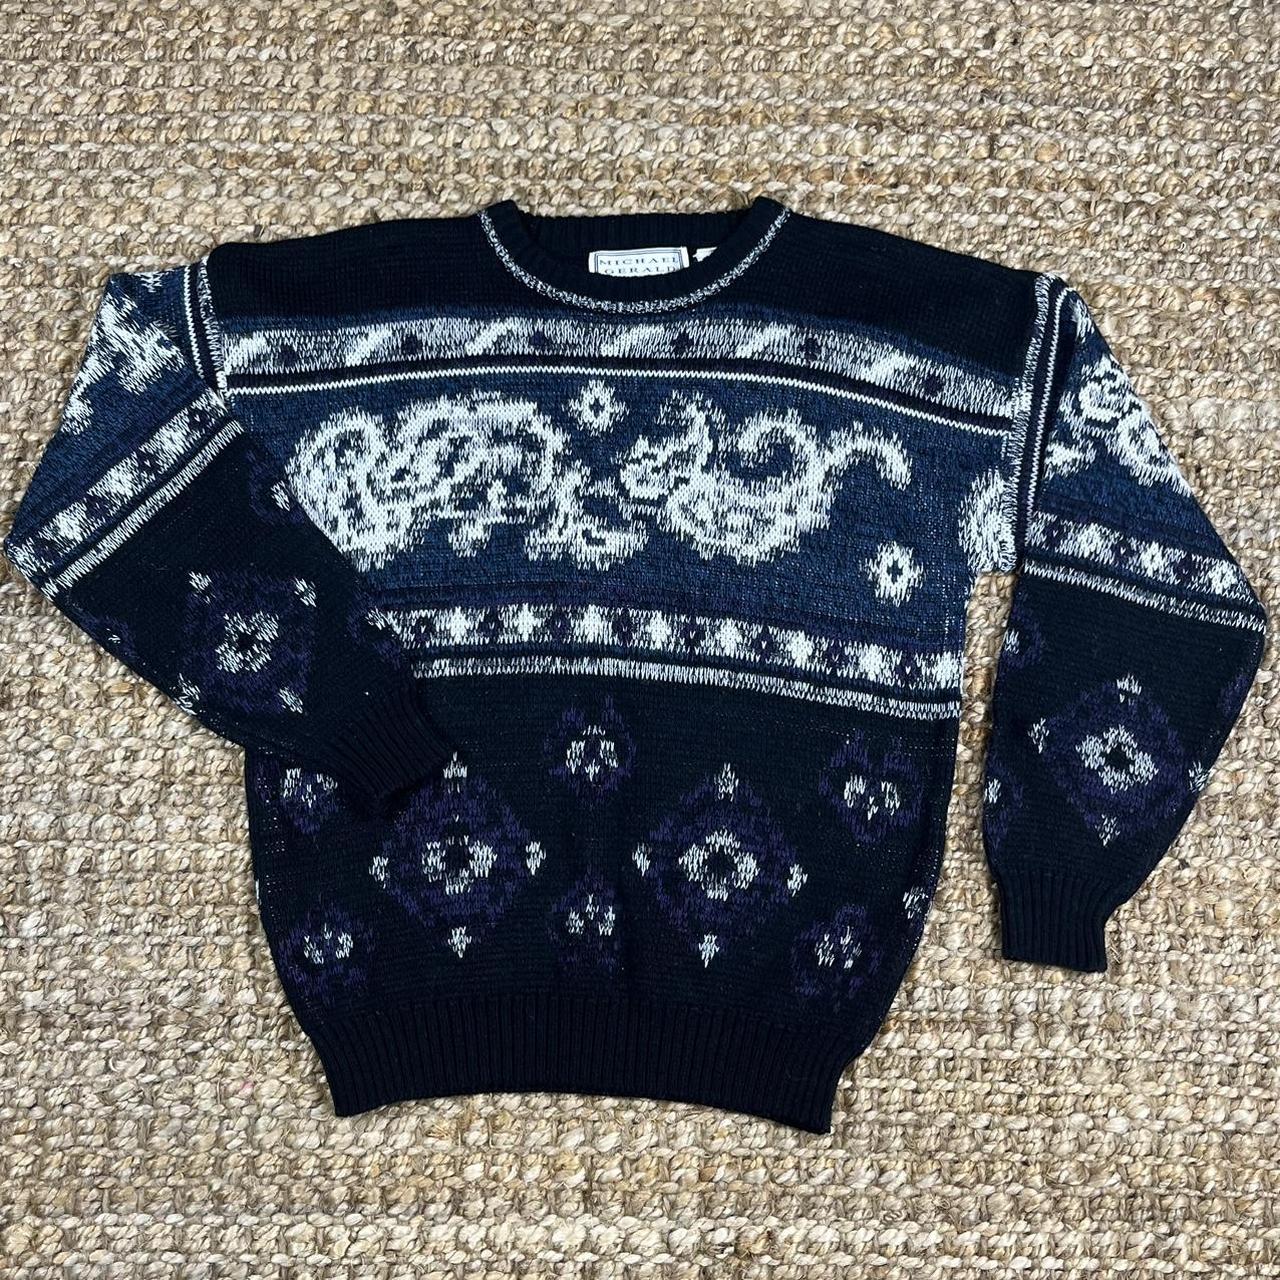 Michael Gerald vintage sweater. Amazing pattern &... - Depop